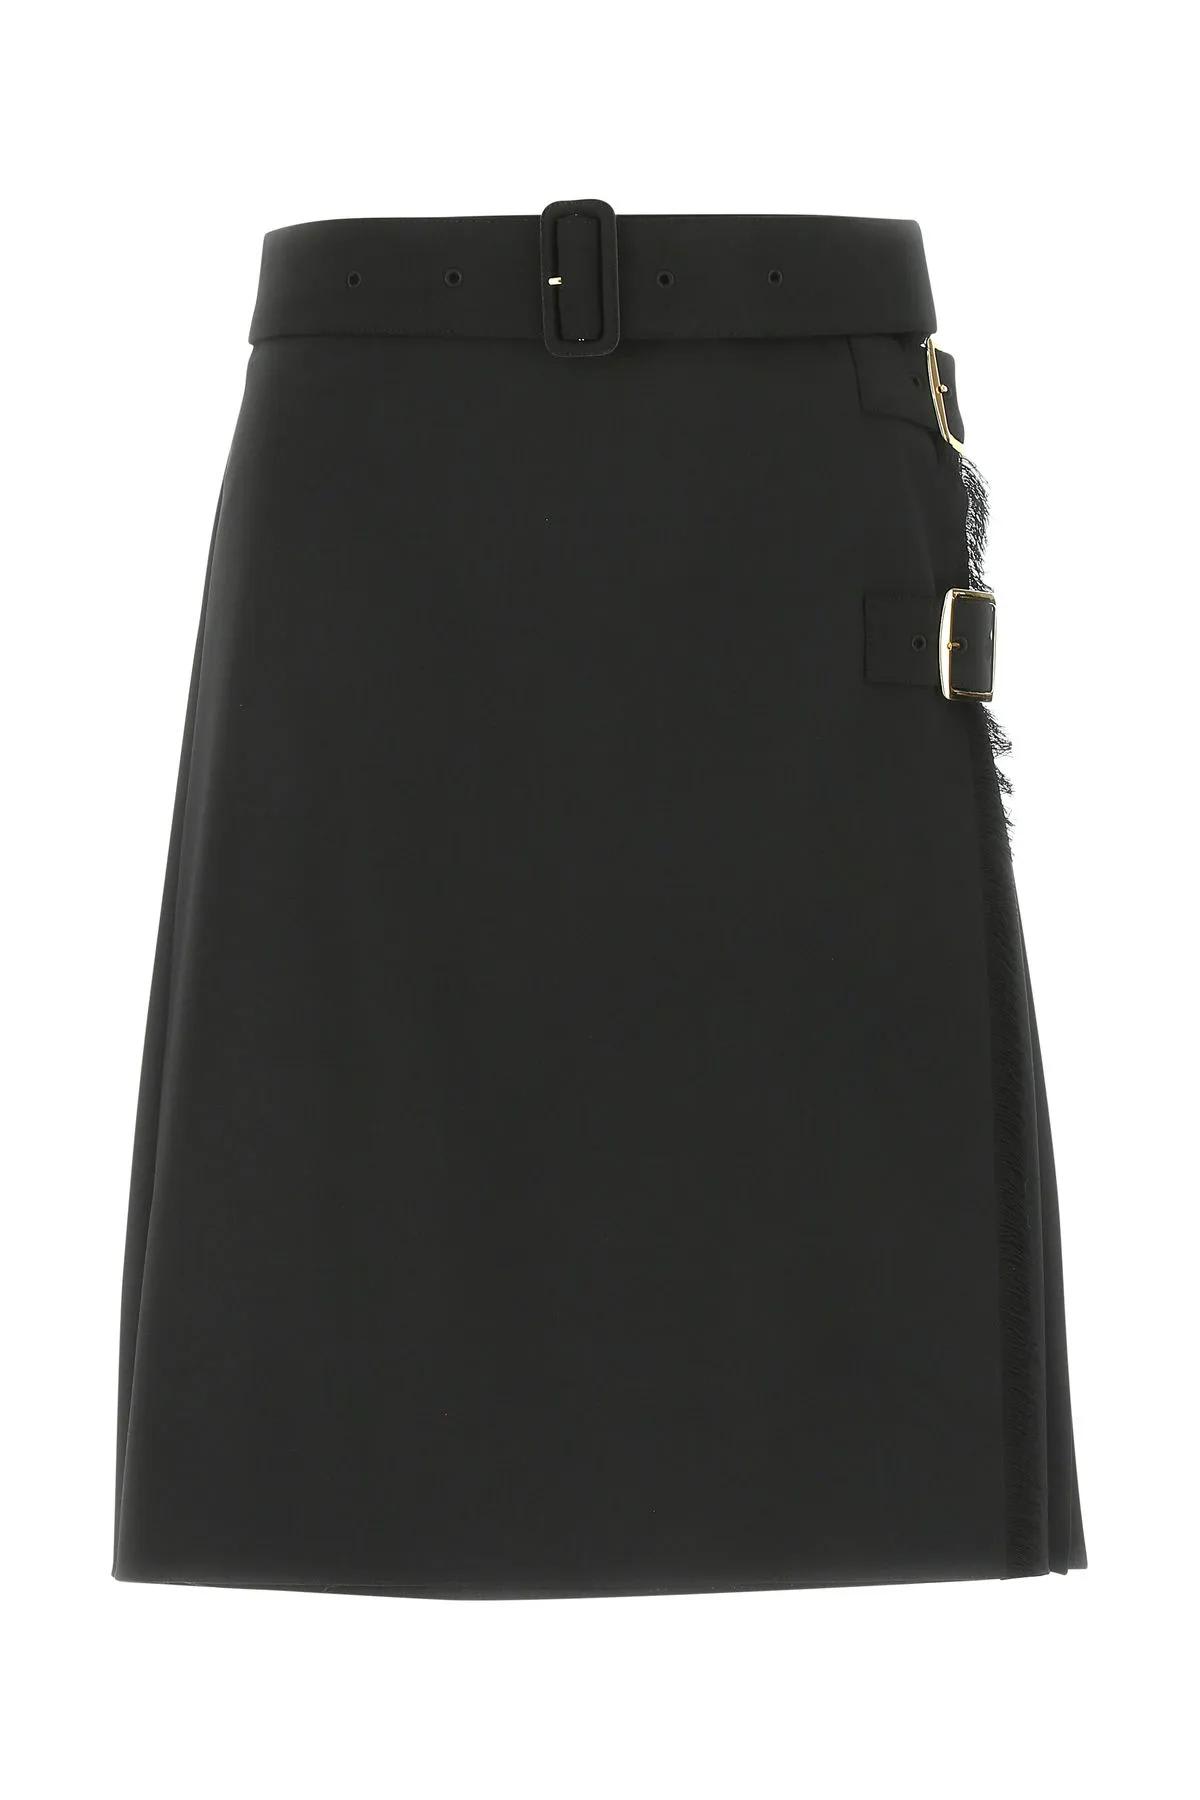 Burberry Black Stretch Polyester Blend Skirt